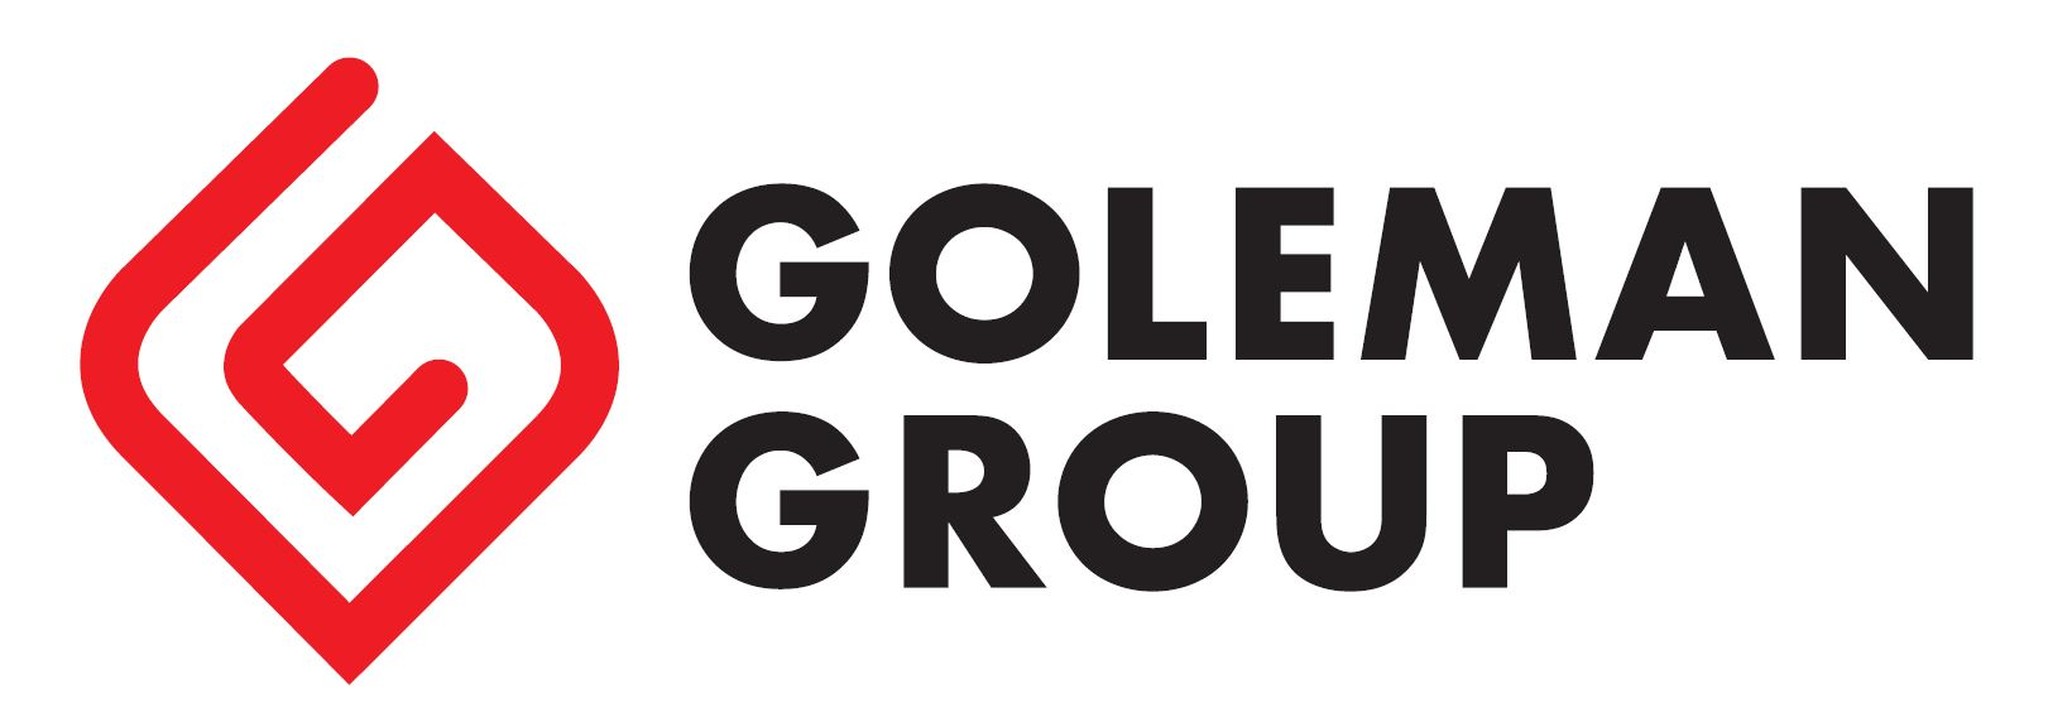 Goleman Group logo